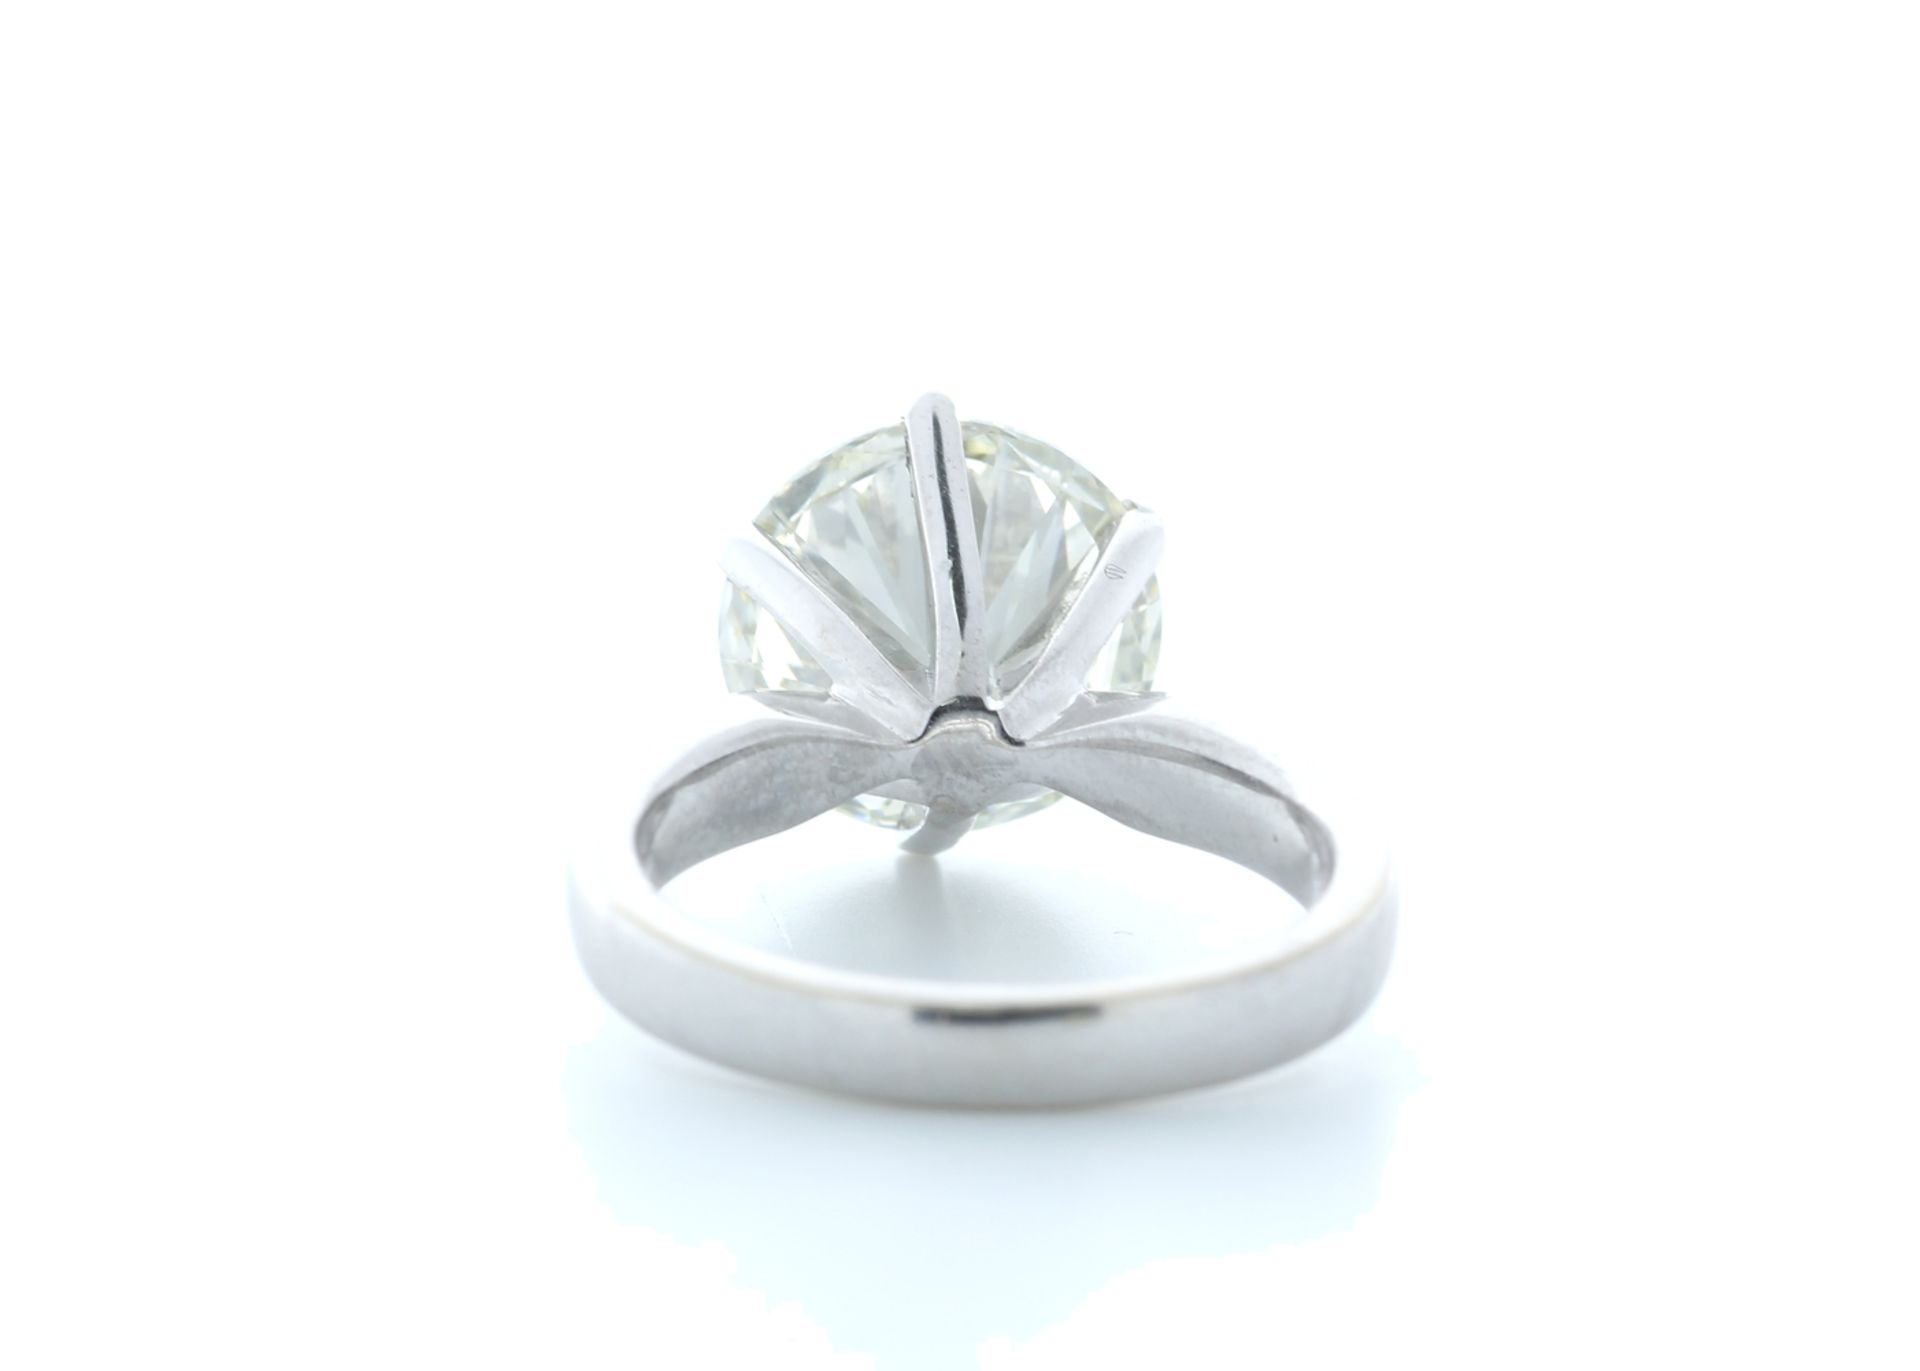 18ct White Gold Single Stone Prong Set Diamond Ring 6.10 Carats - Valued by IDI £360,000.00 - 18ct - Image 3 of 5